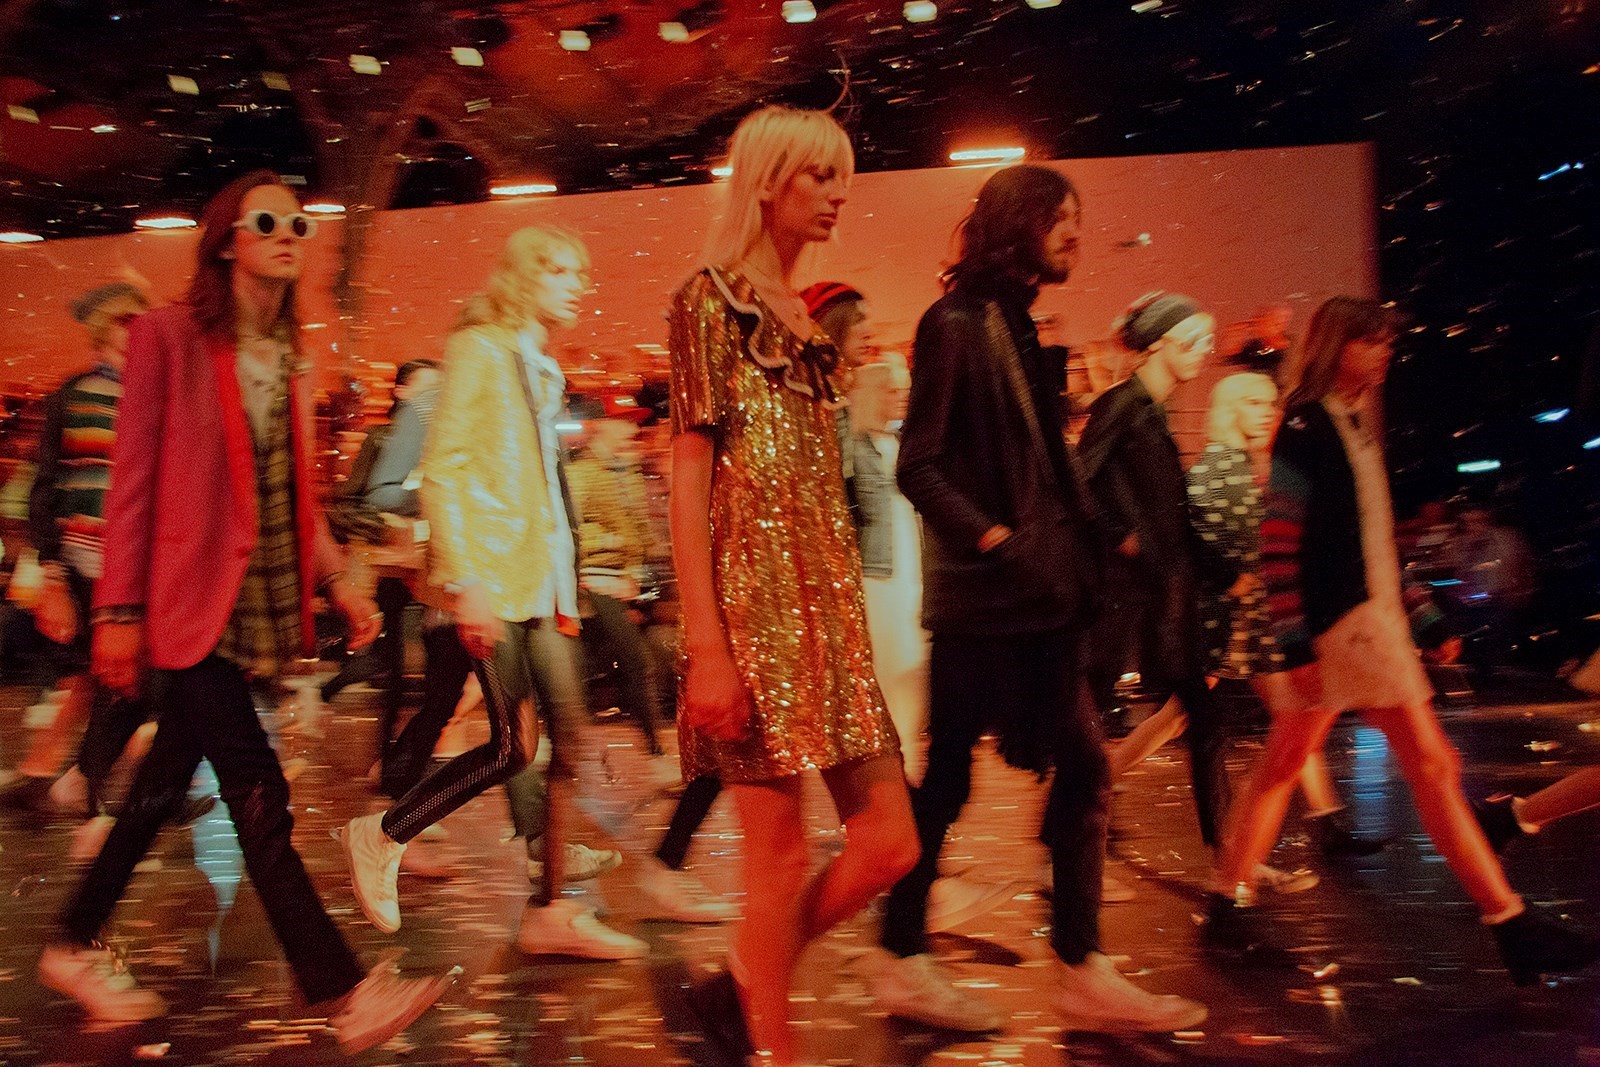 Saint Laurent's Hedi Slimane rocks the L.A. runway with retro-glam